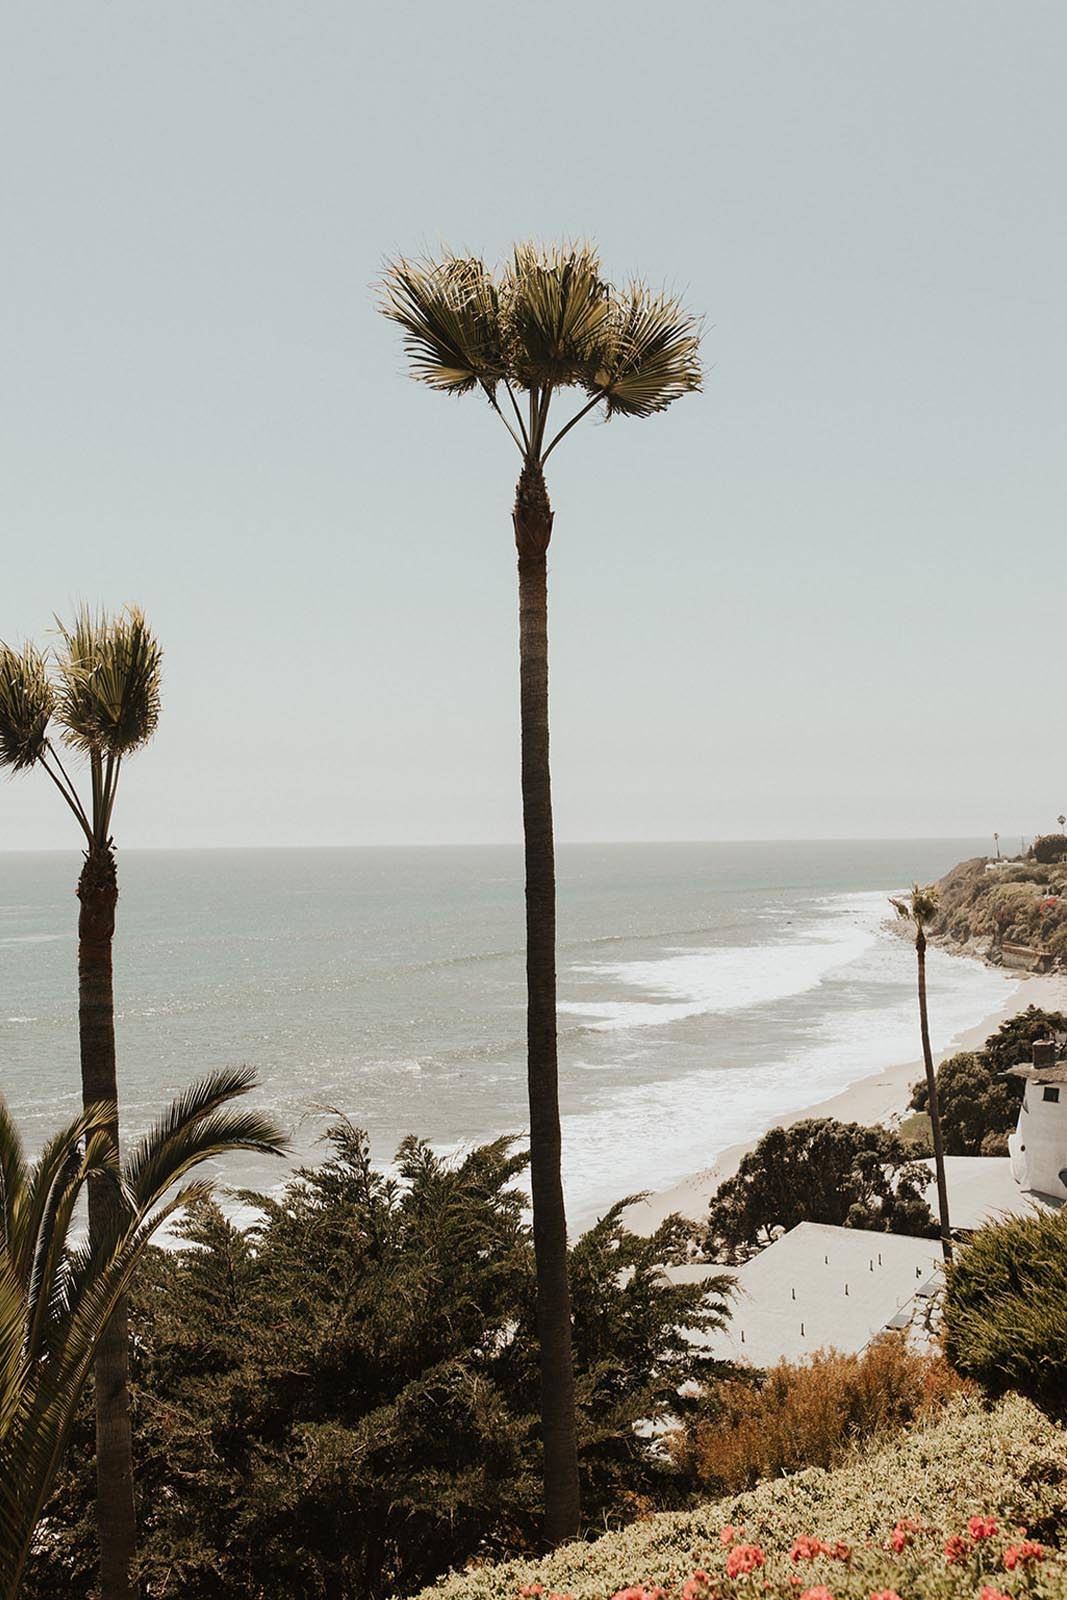 Coastline with palm trees